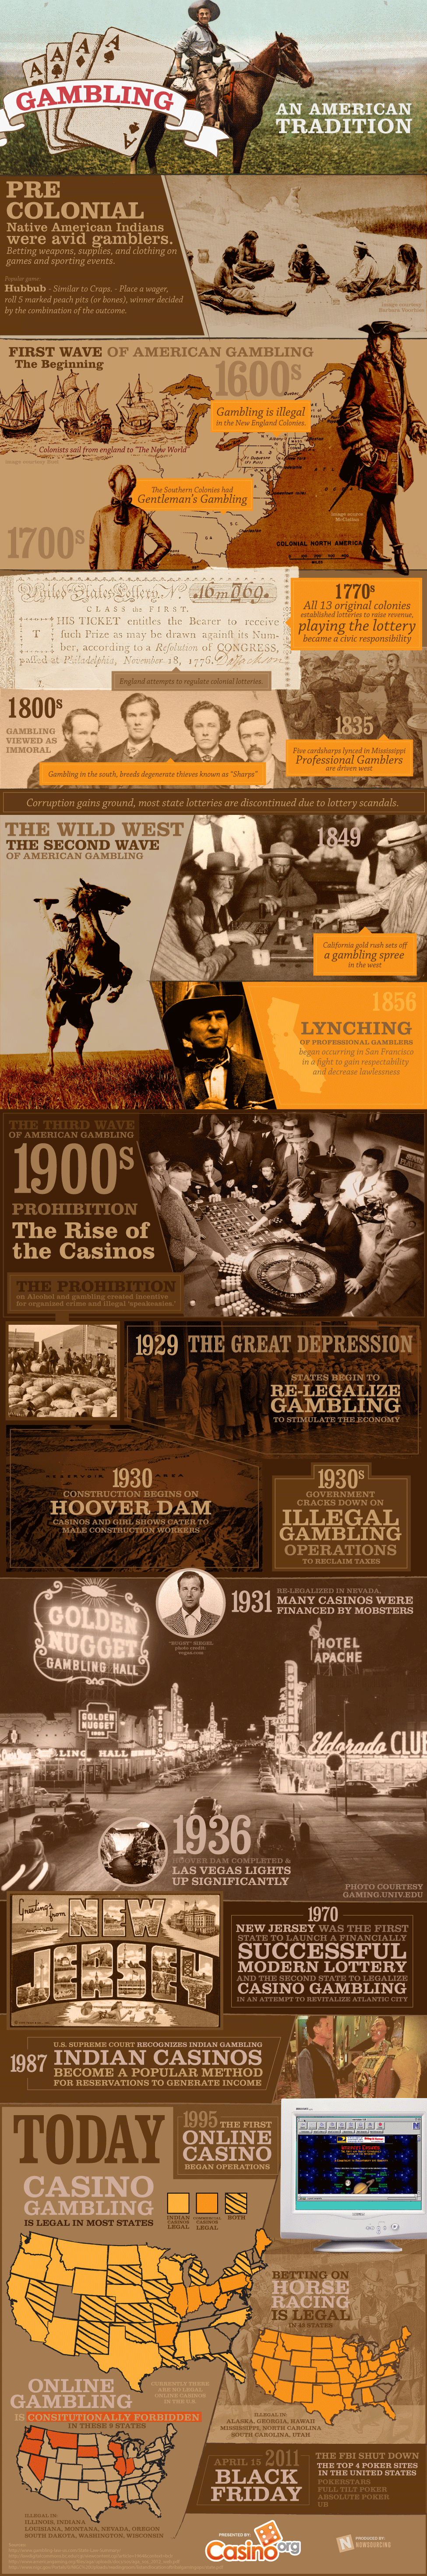 The History of American Gambling